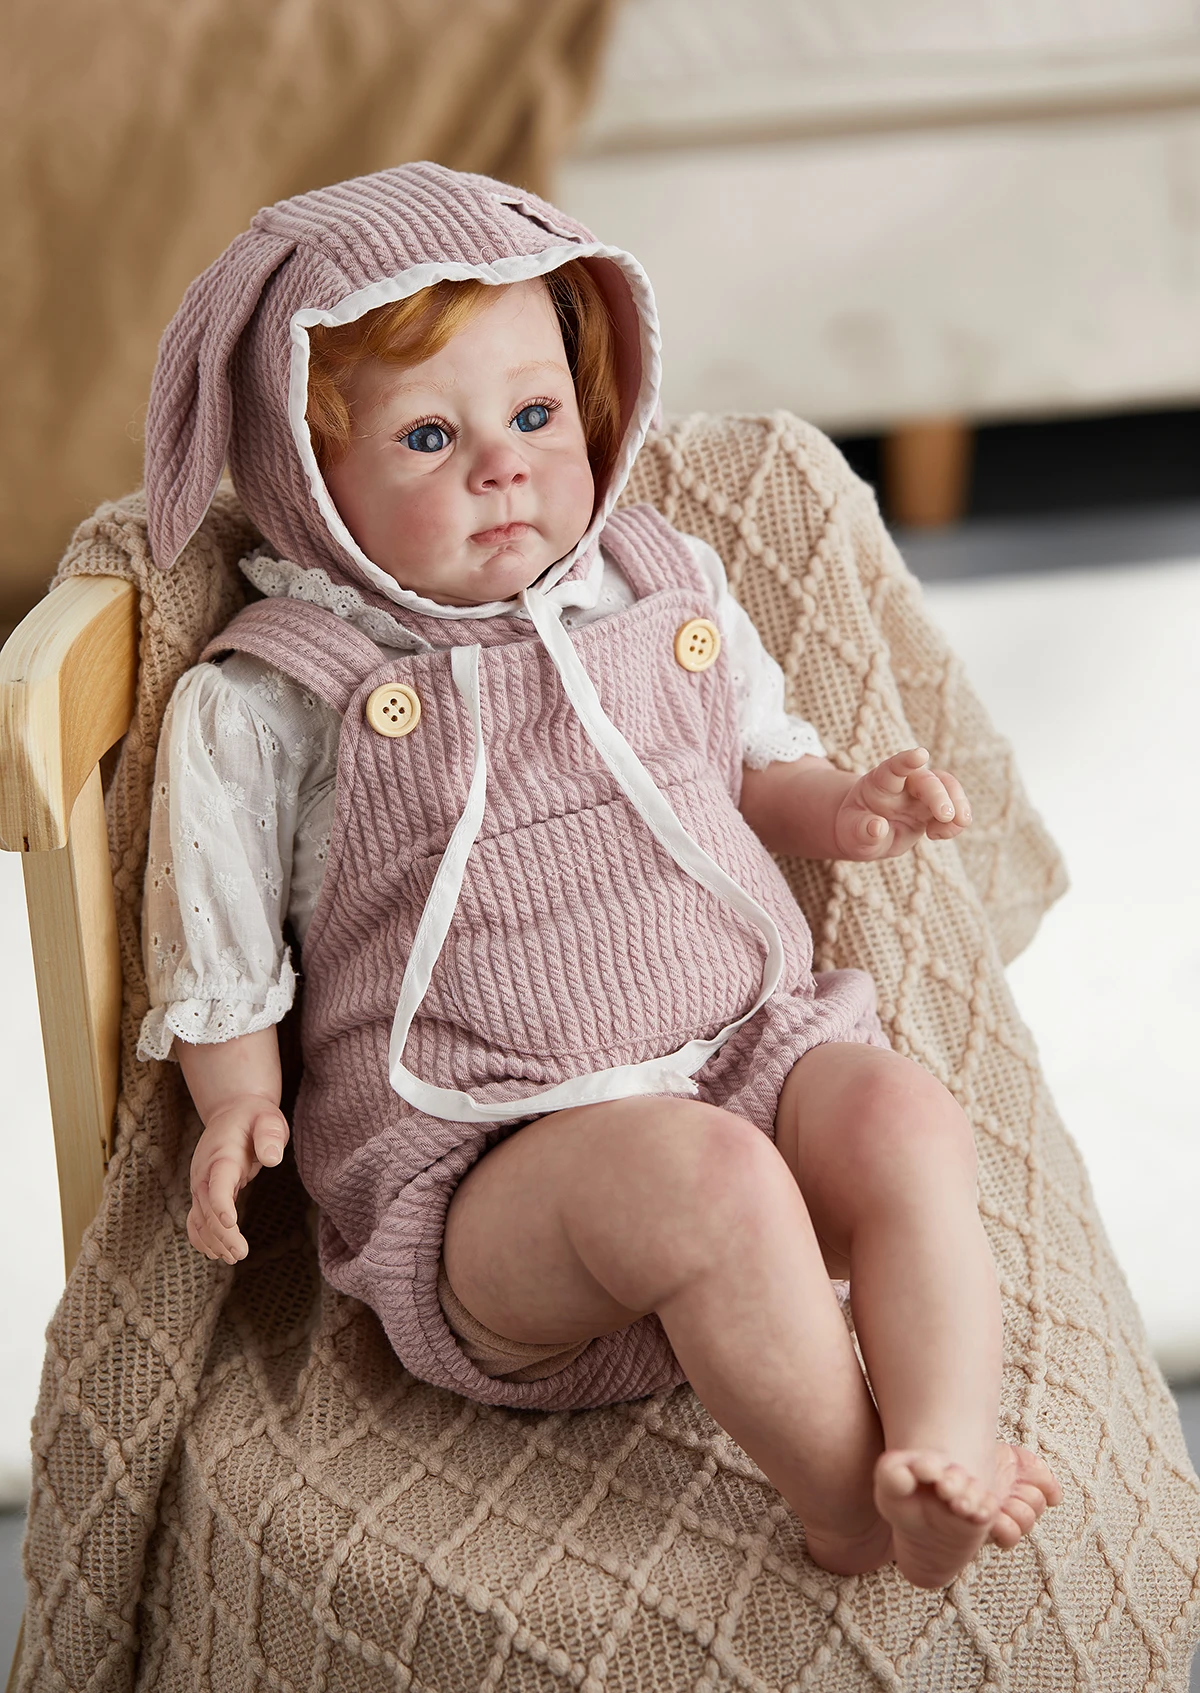 Miaio the reborn toddler doll reborn babies Huxley reborn baby reborn real baby doll realistic baby dolls reborn baby girl